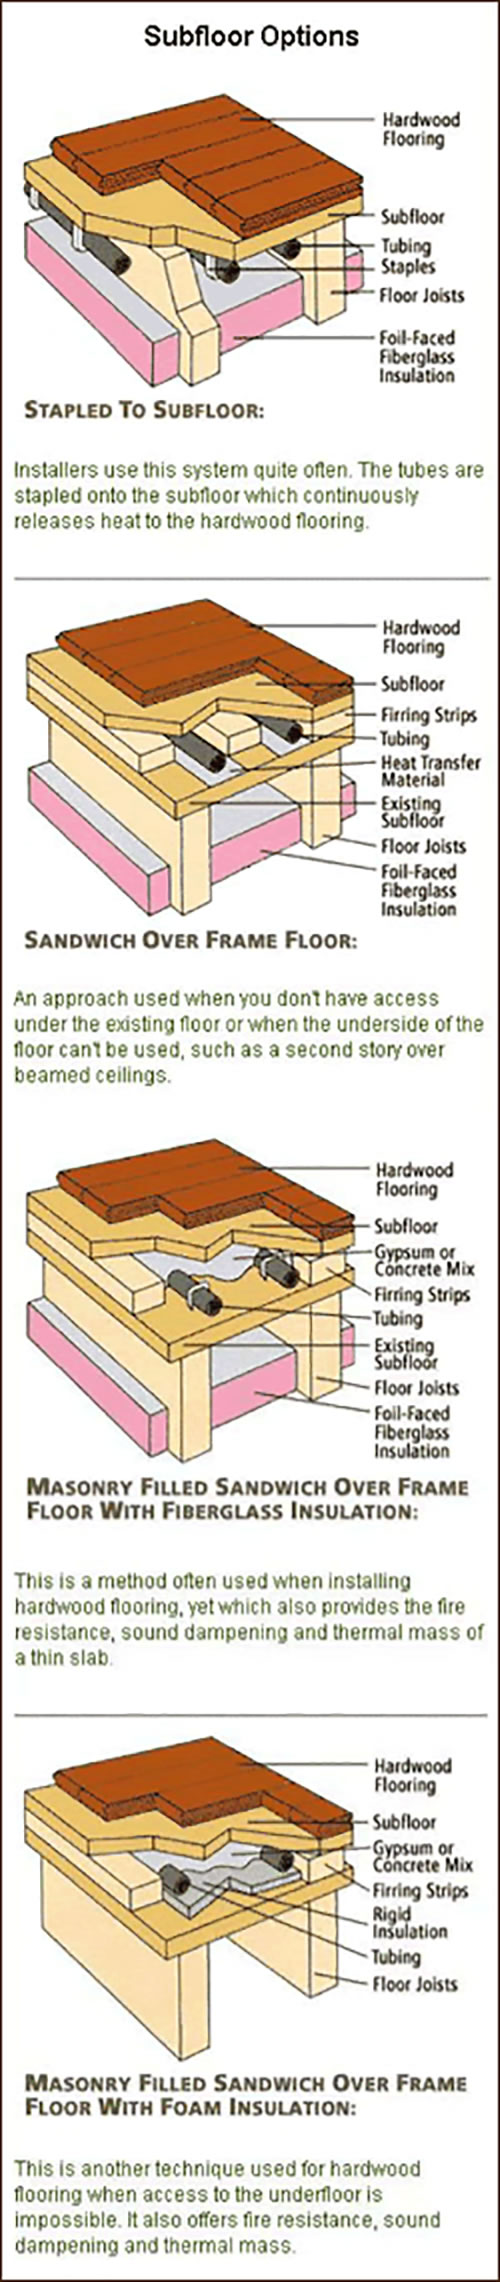 How To Install Hardwood Floors Over, How To Install Radiant Floor Heating Under Hardwood